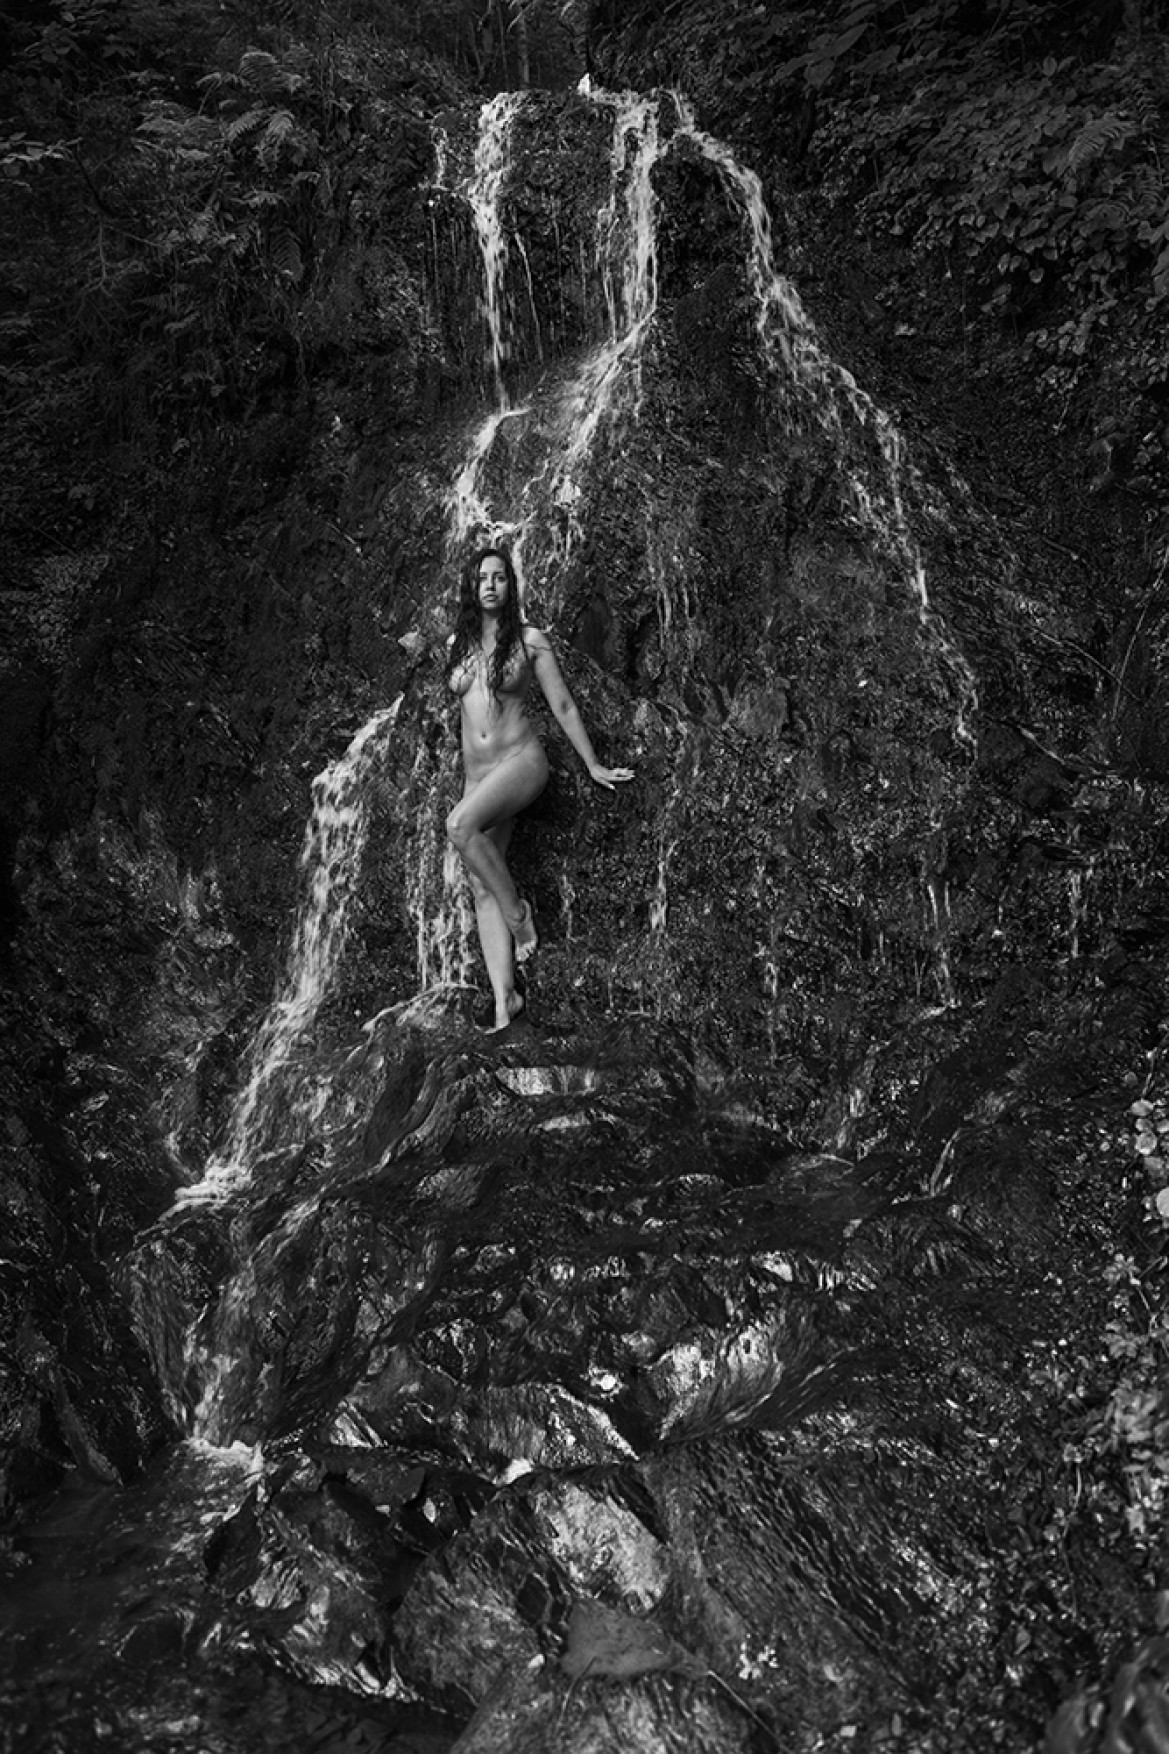 fot. Łukasz Gurdak, nominacja w kat. Nudes, z serii "Nude in the Nature"